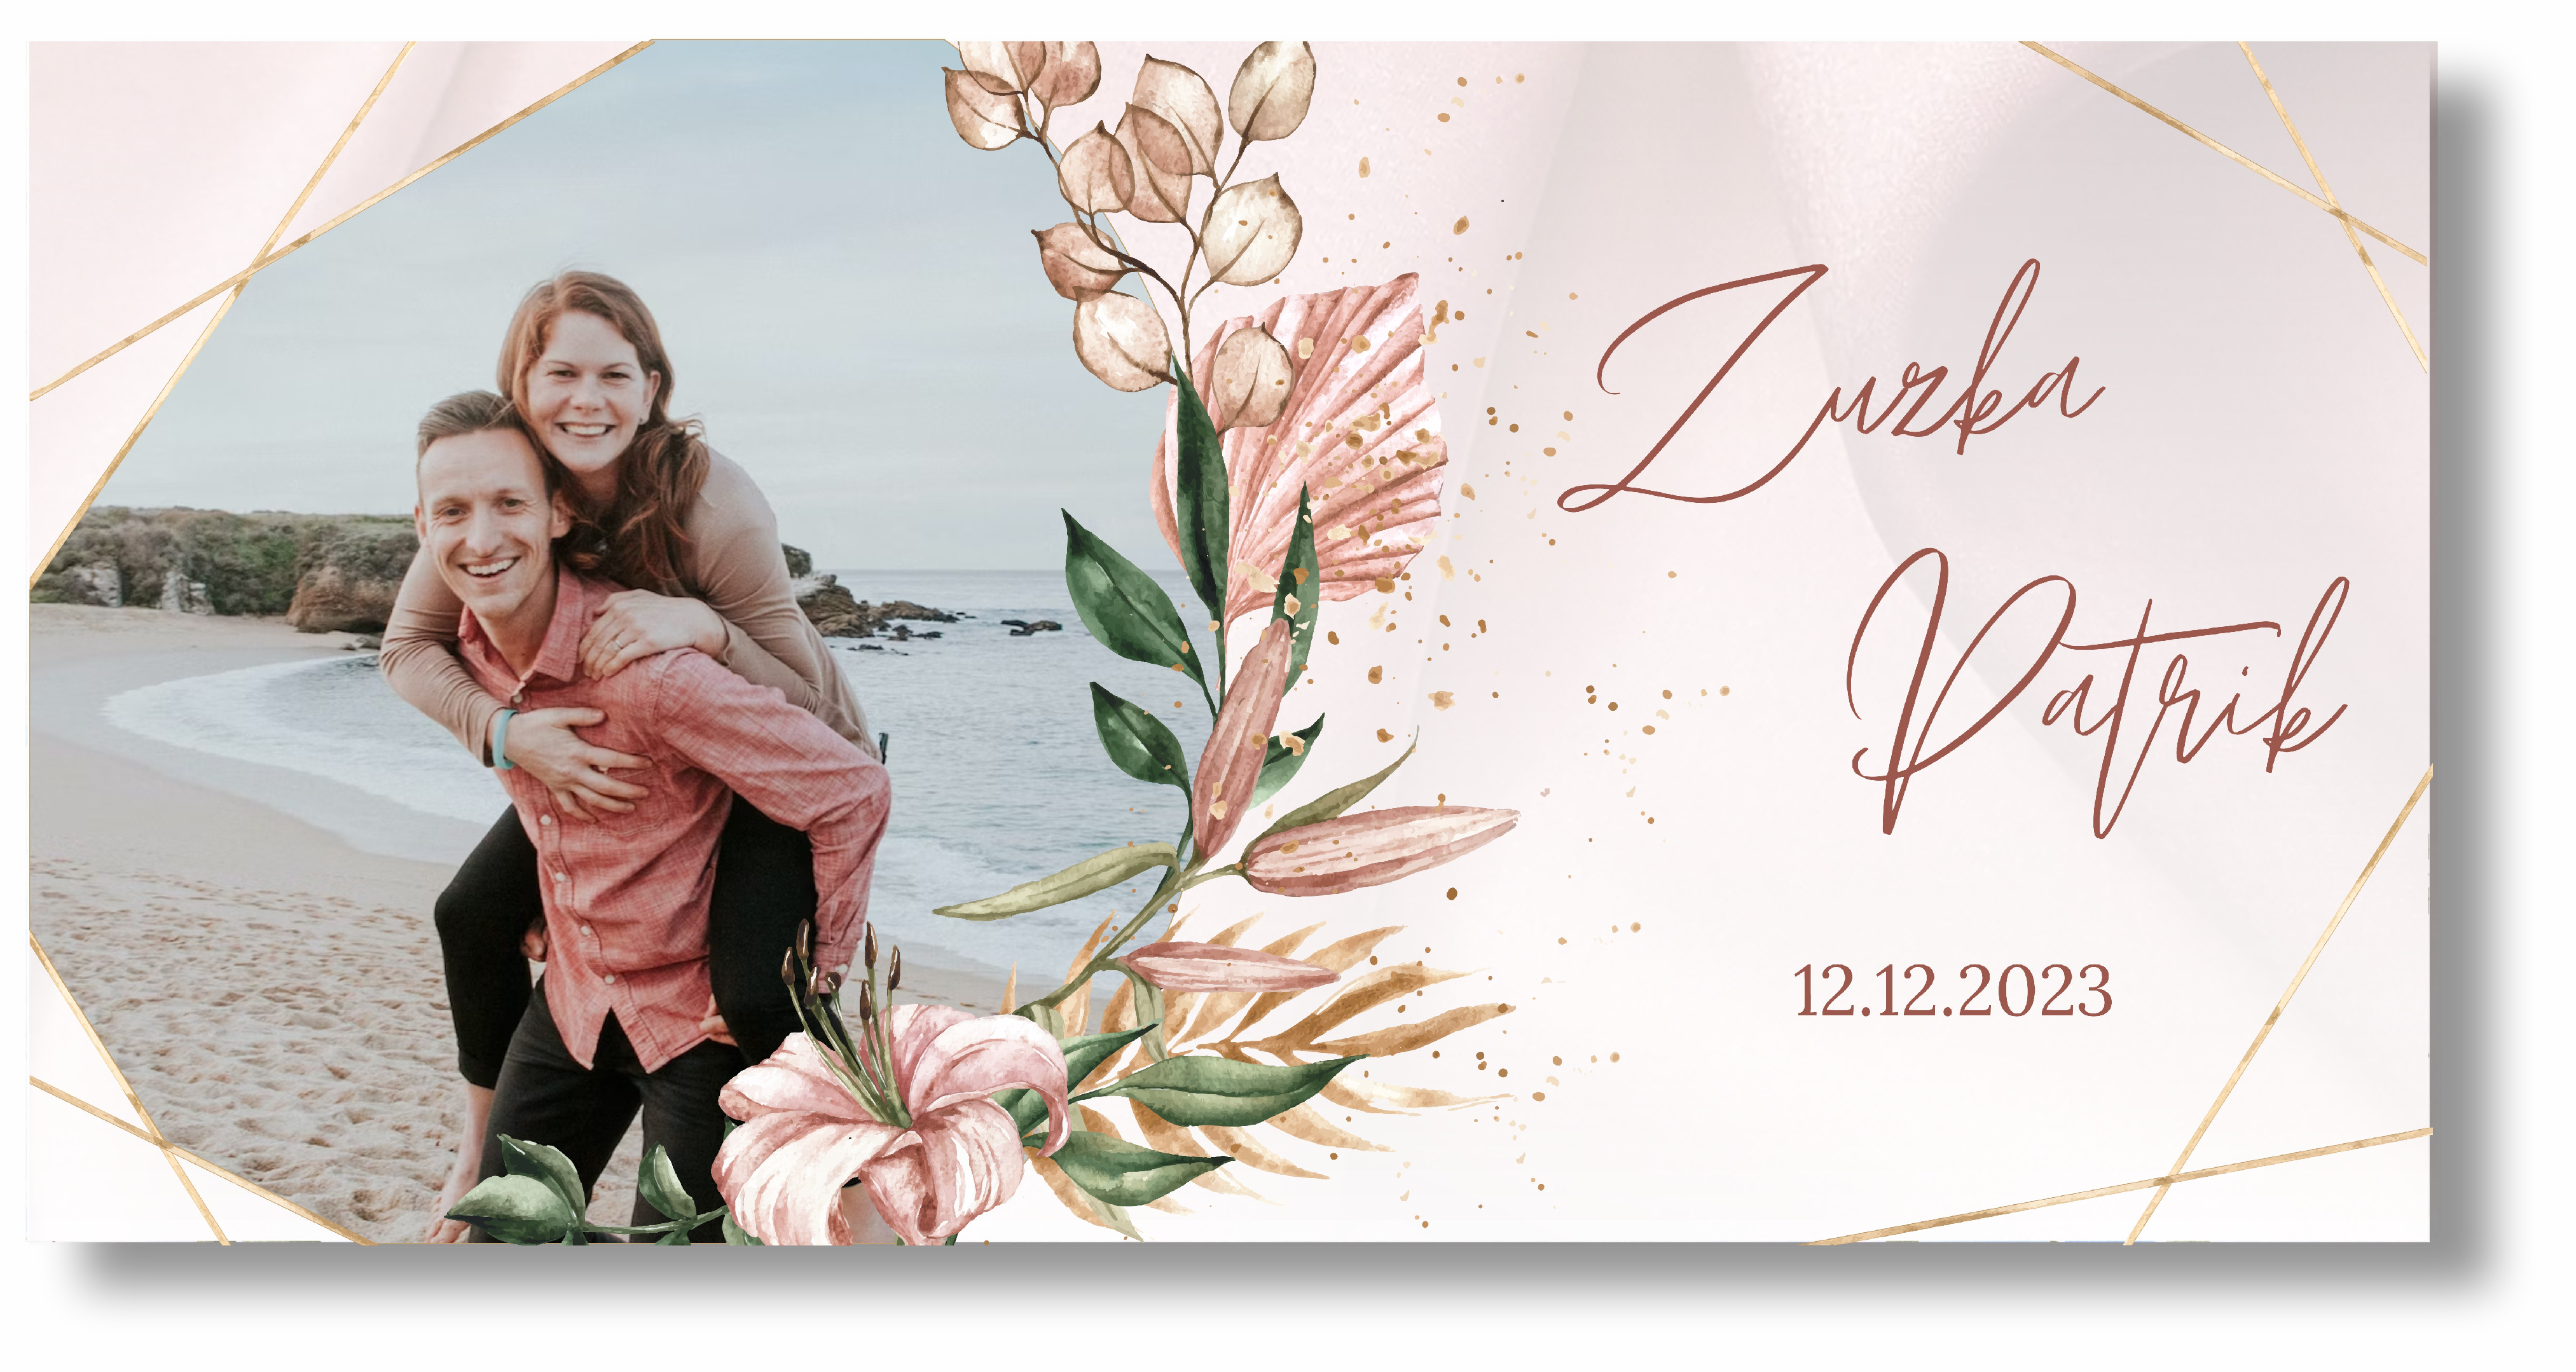 Personal Svatební banner s fotkou - Lovely pink Rozmer banner: 130 x 260 cm